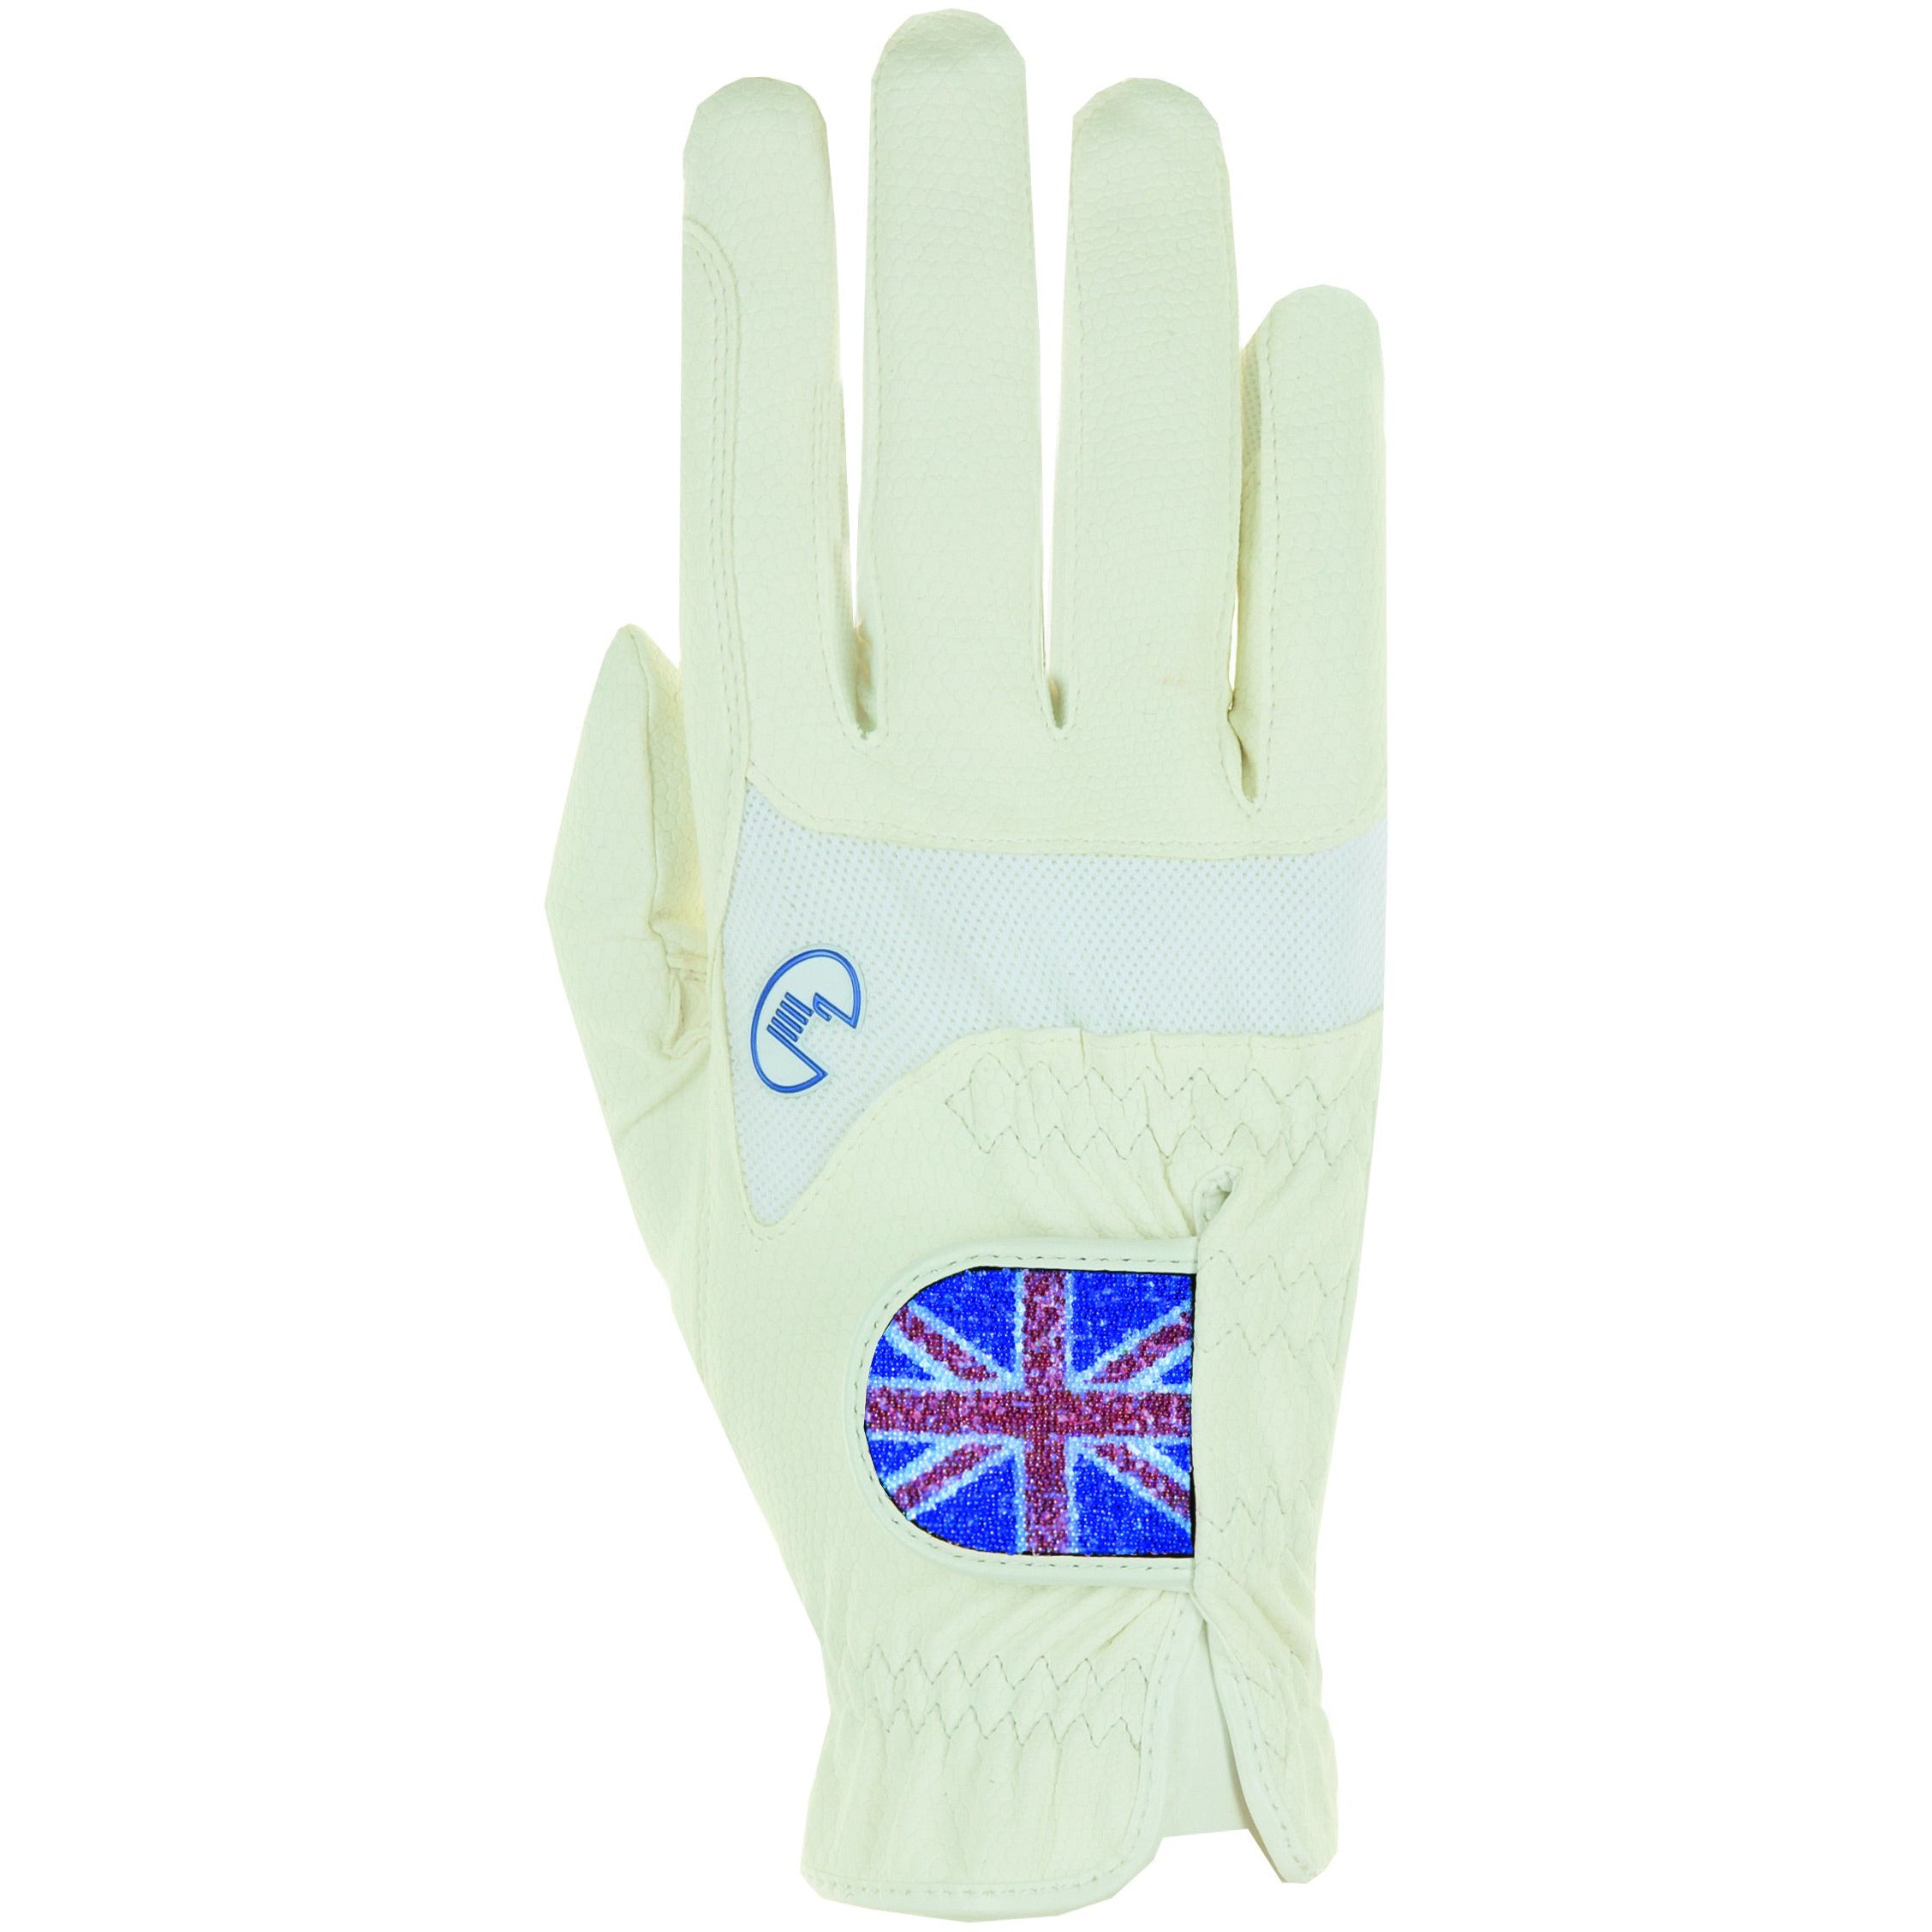 Roeckl Maryland Glove - UK